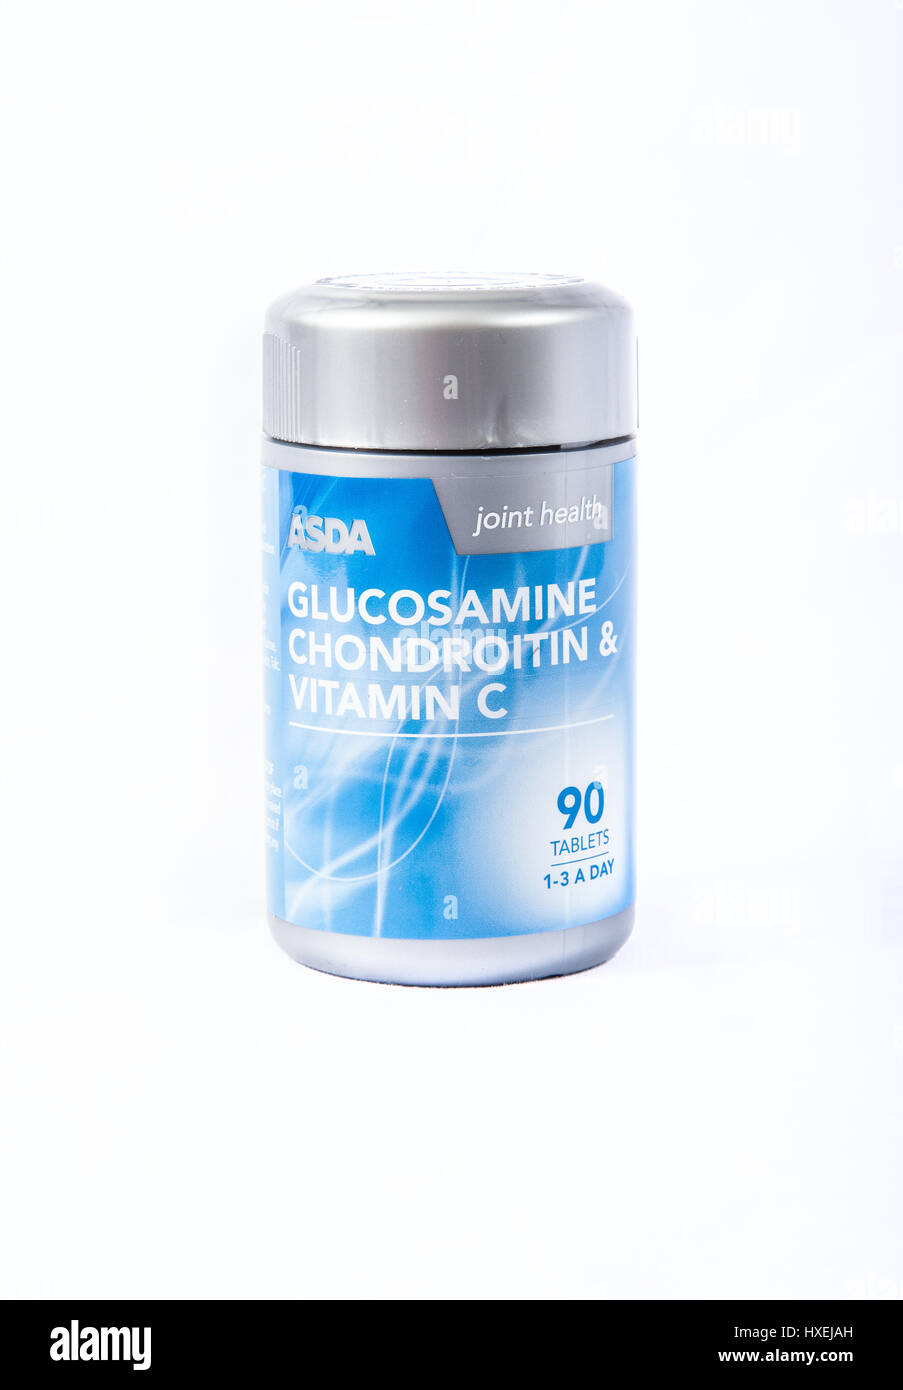 ASDA Glucosamine Chondroitin & Vitamin C Joint Health Stock Photo - Alamy